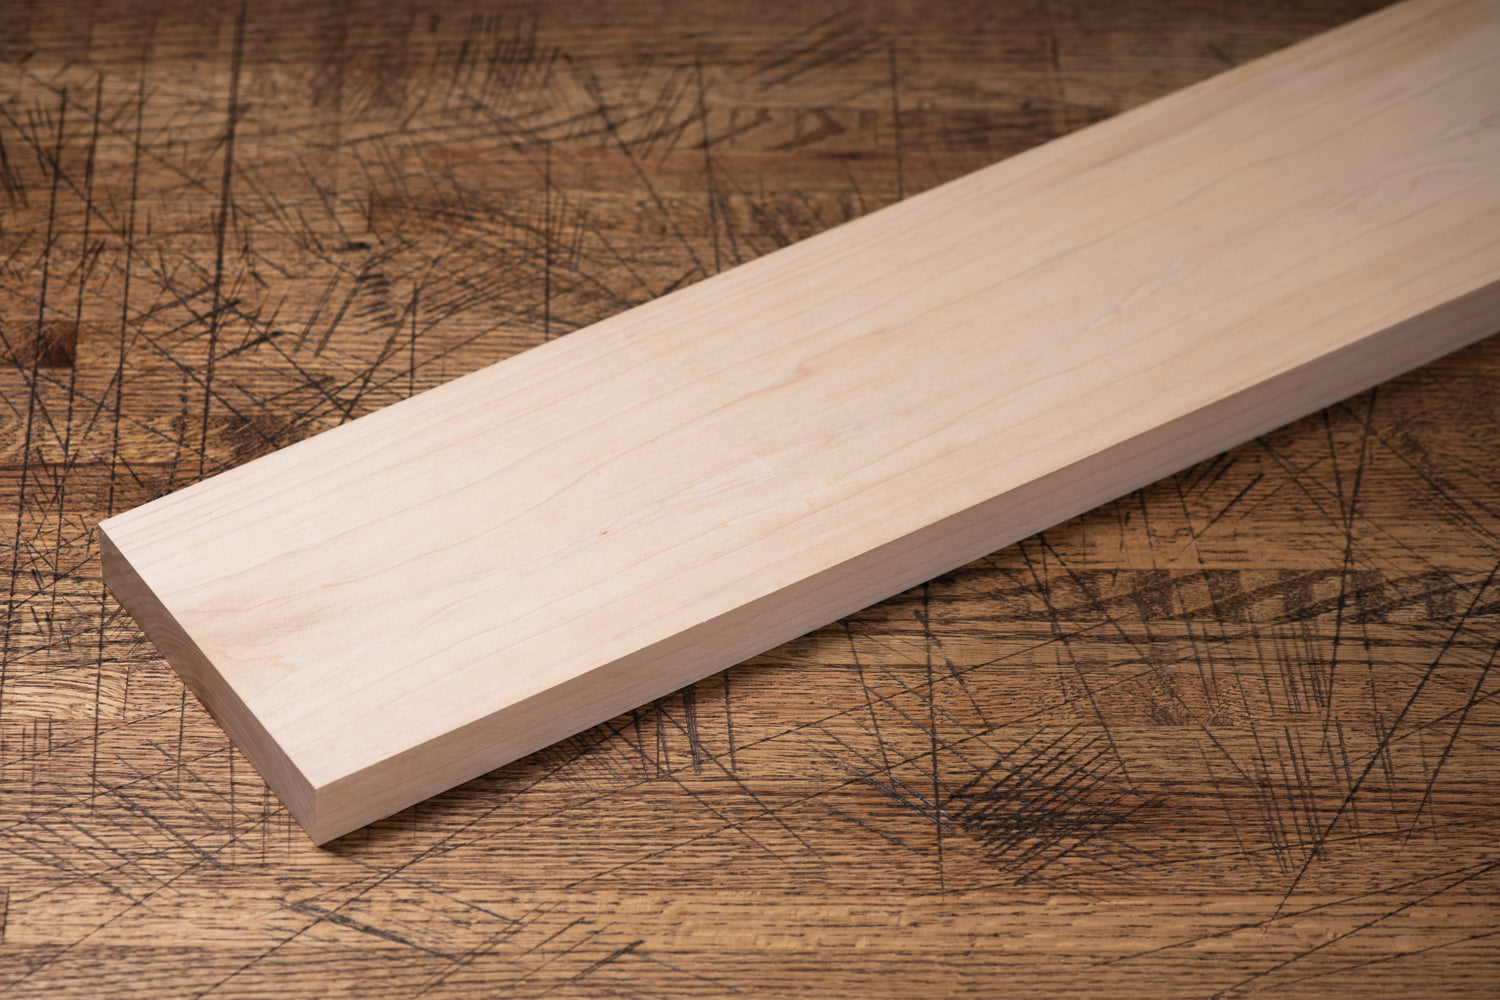 5/4&quot; (1-1/16&quot;) Hard Maple - Dimensional Lumber